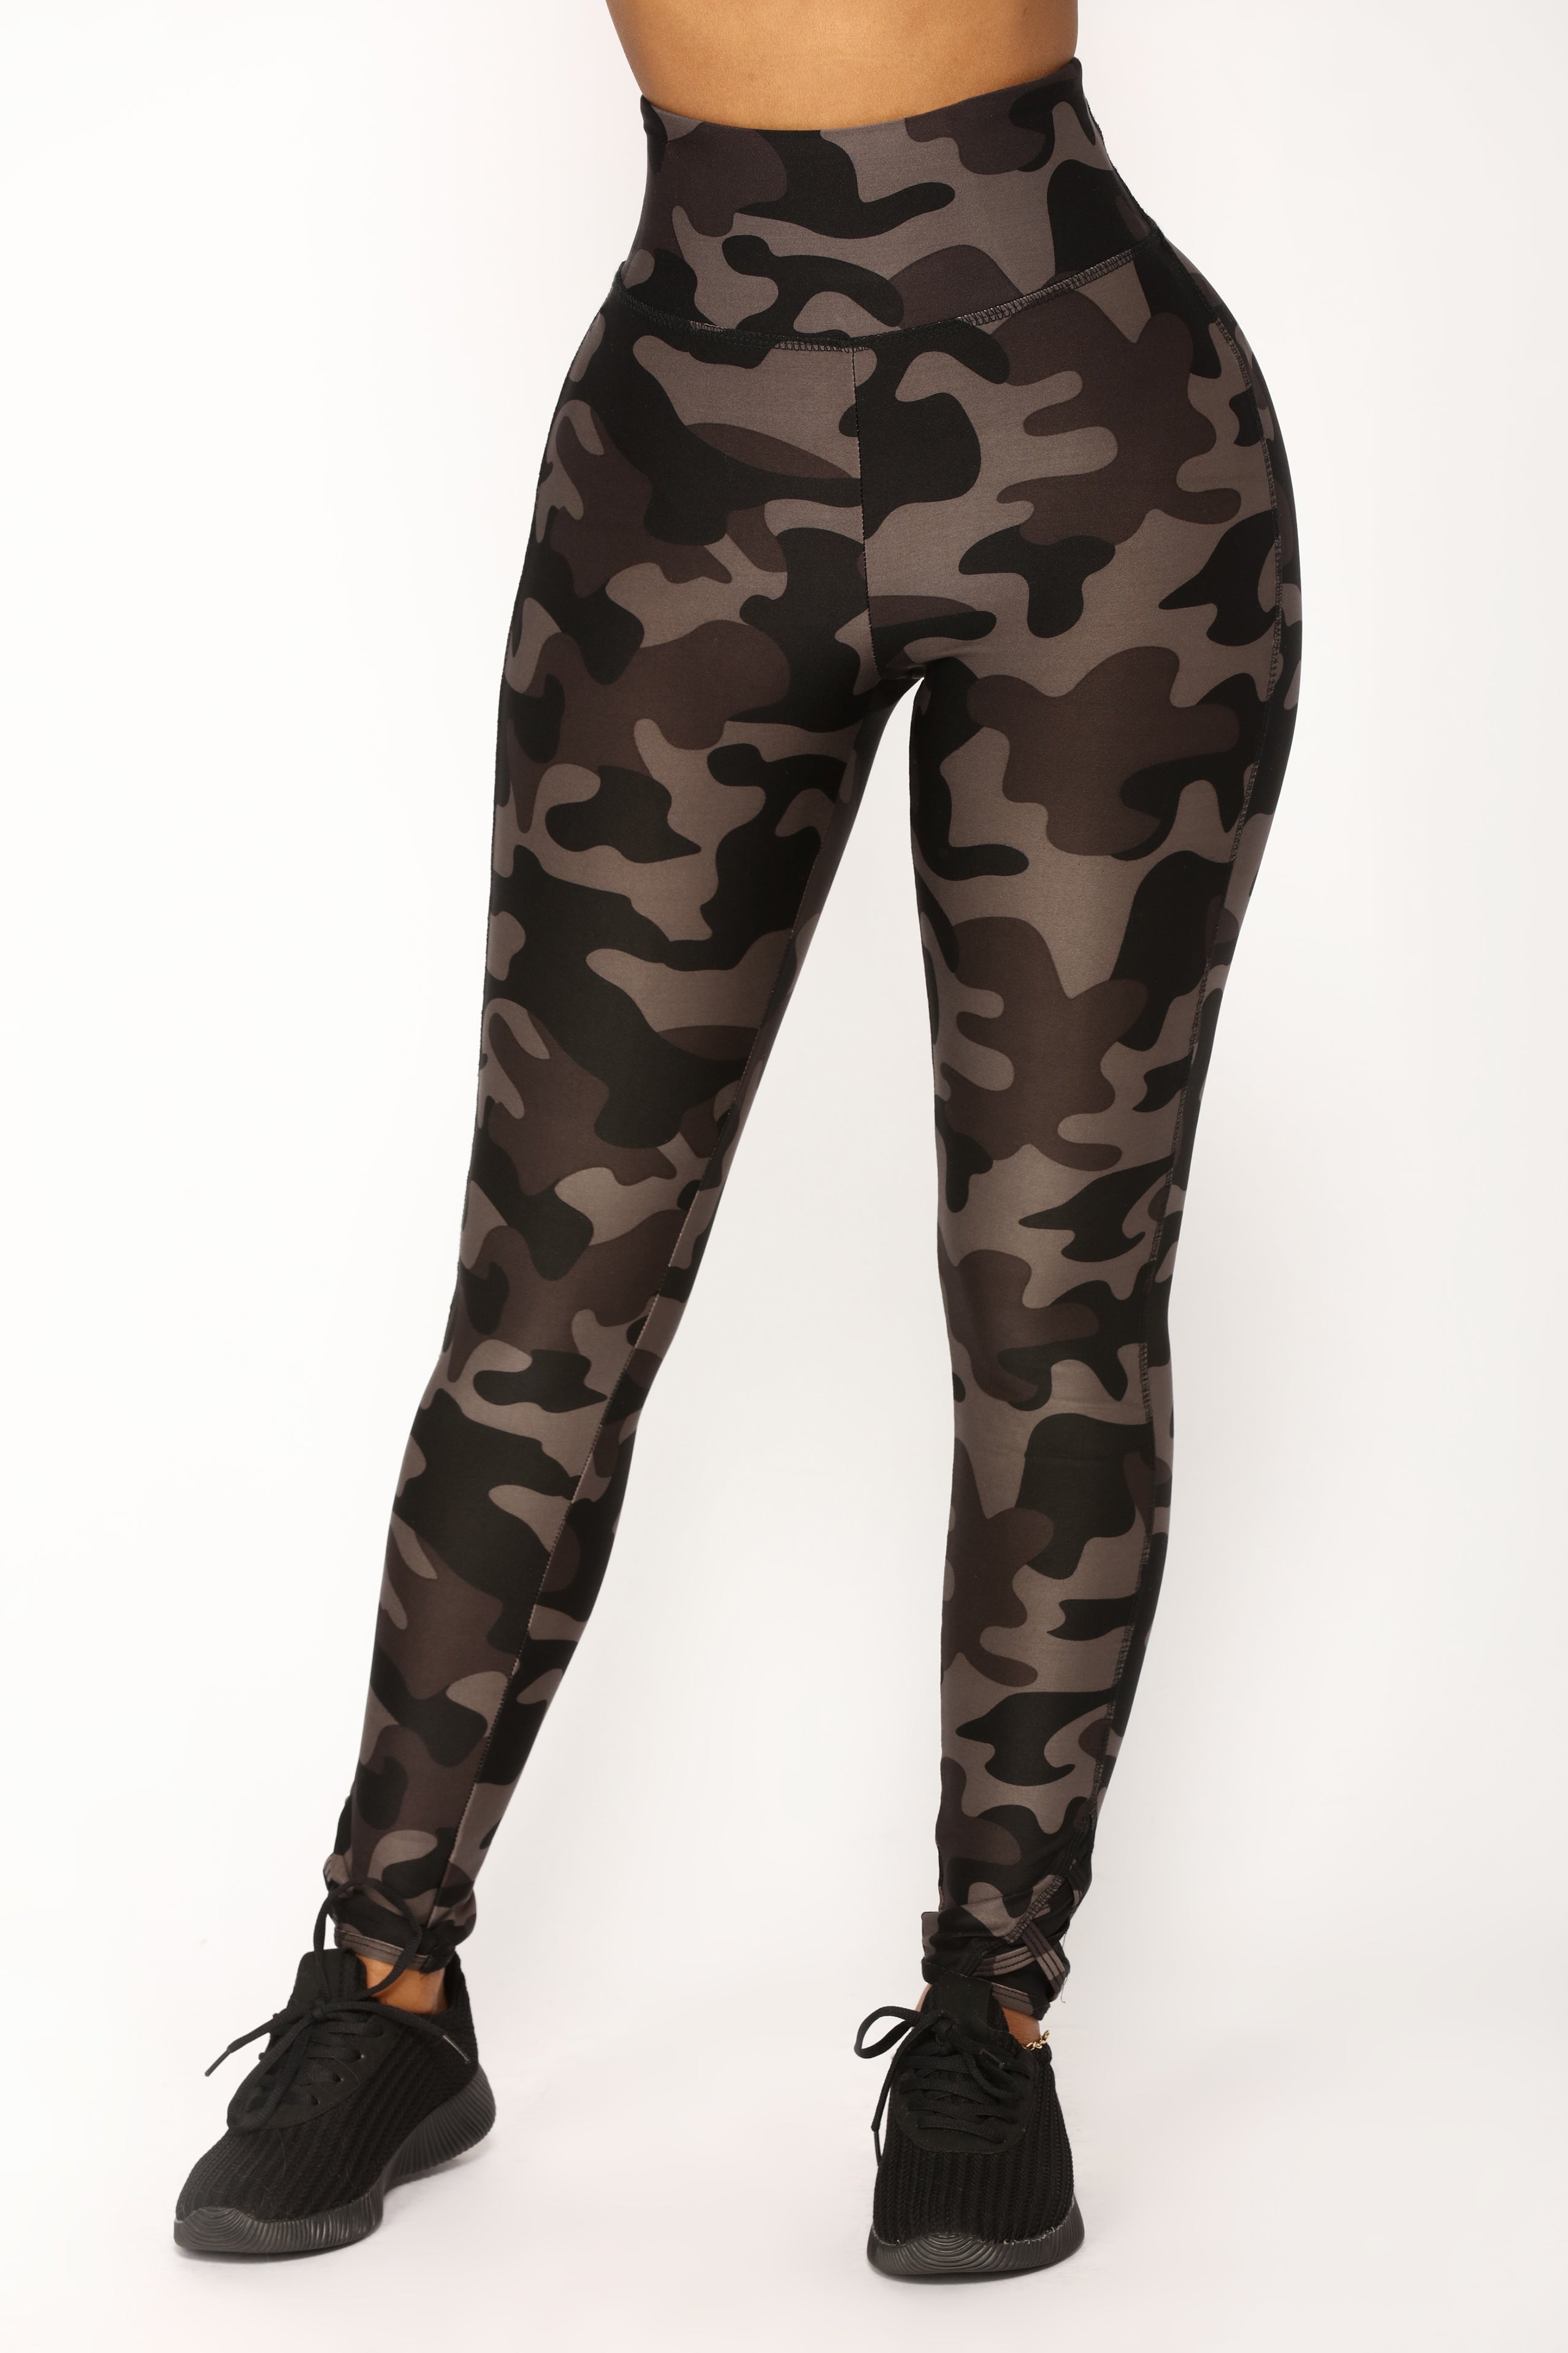 Jack David Womens Plus Size Army Camouflage Soft Leggings 1X-2X-3X